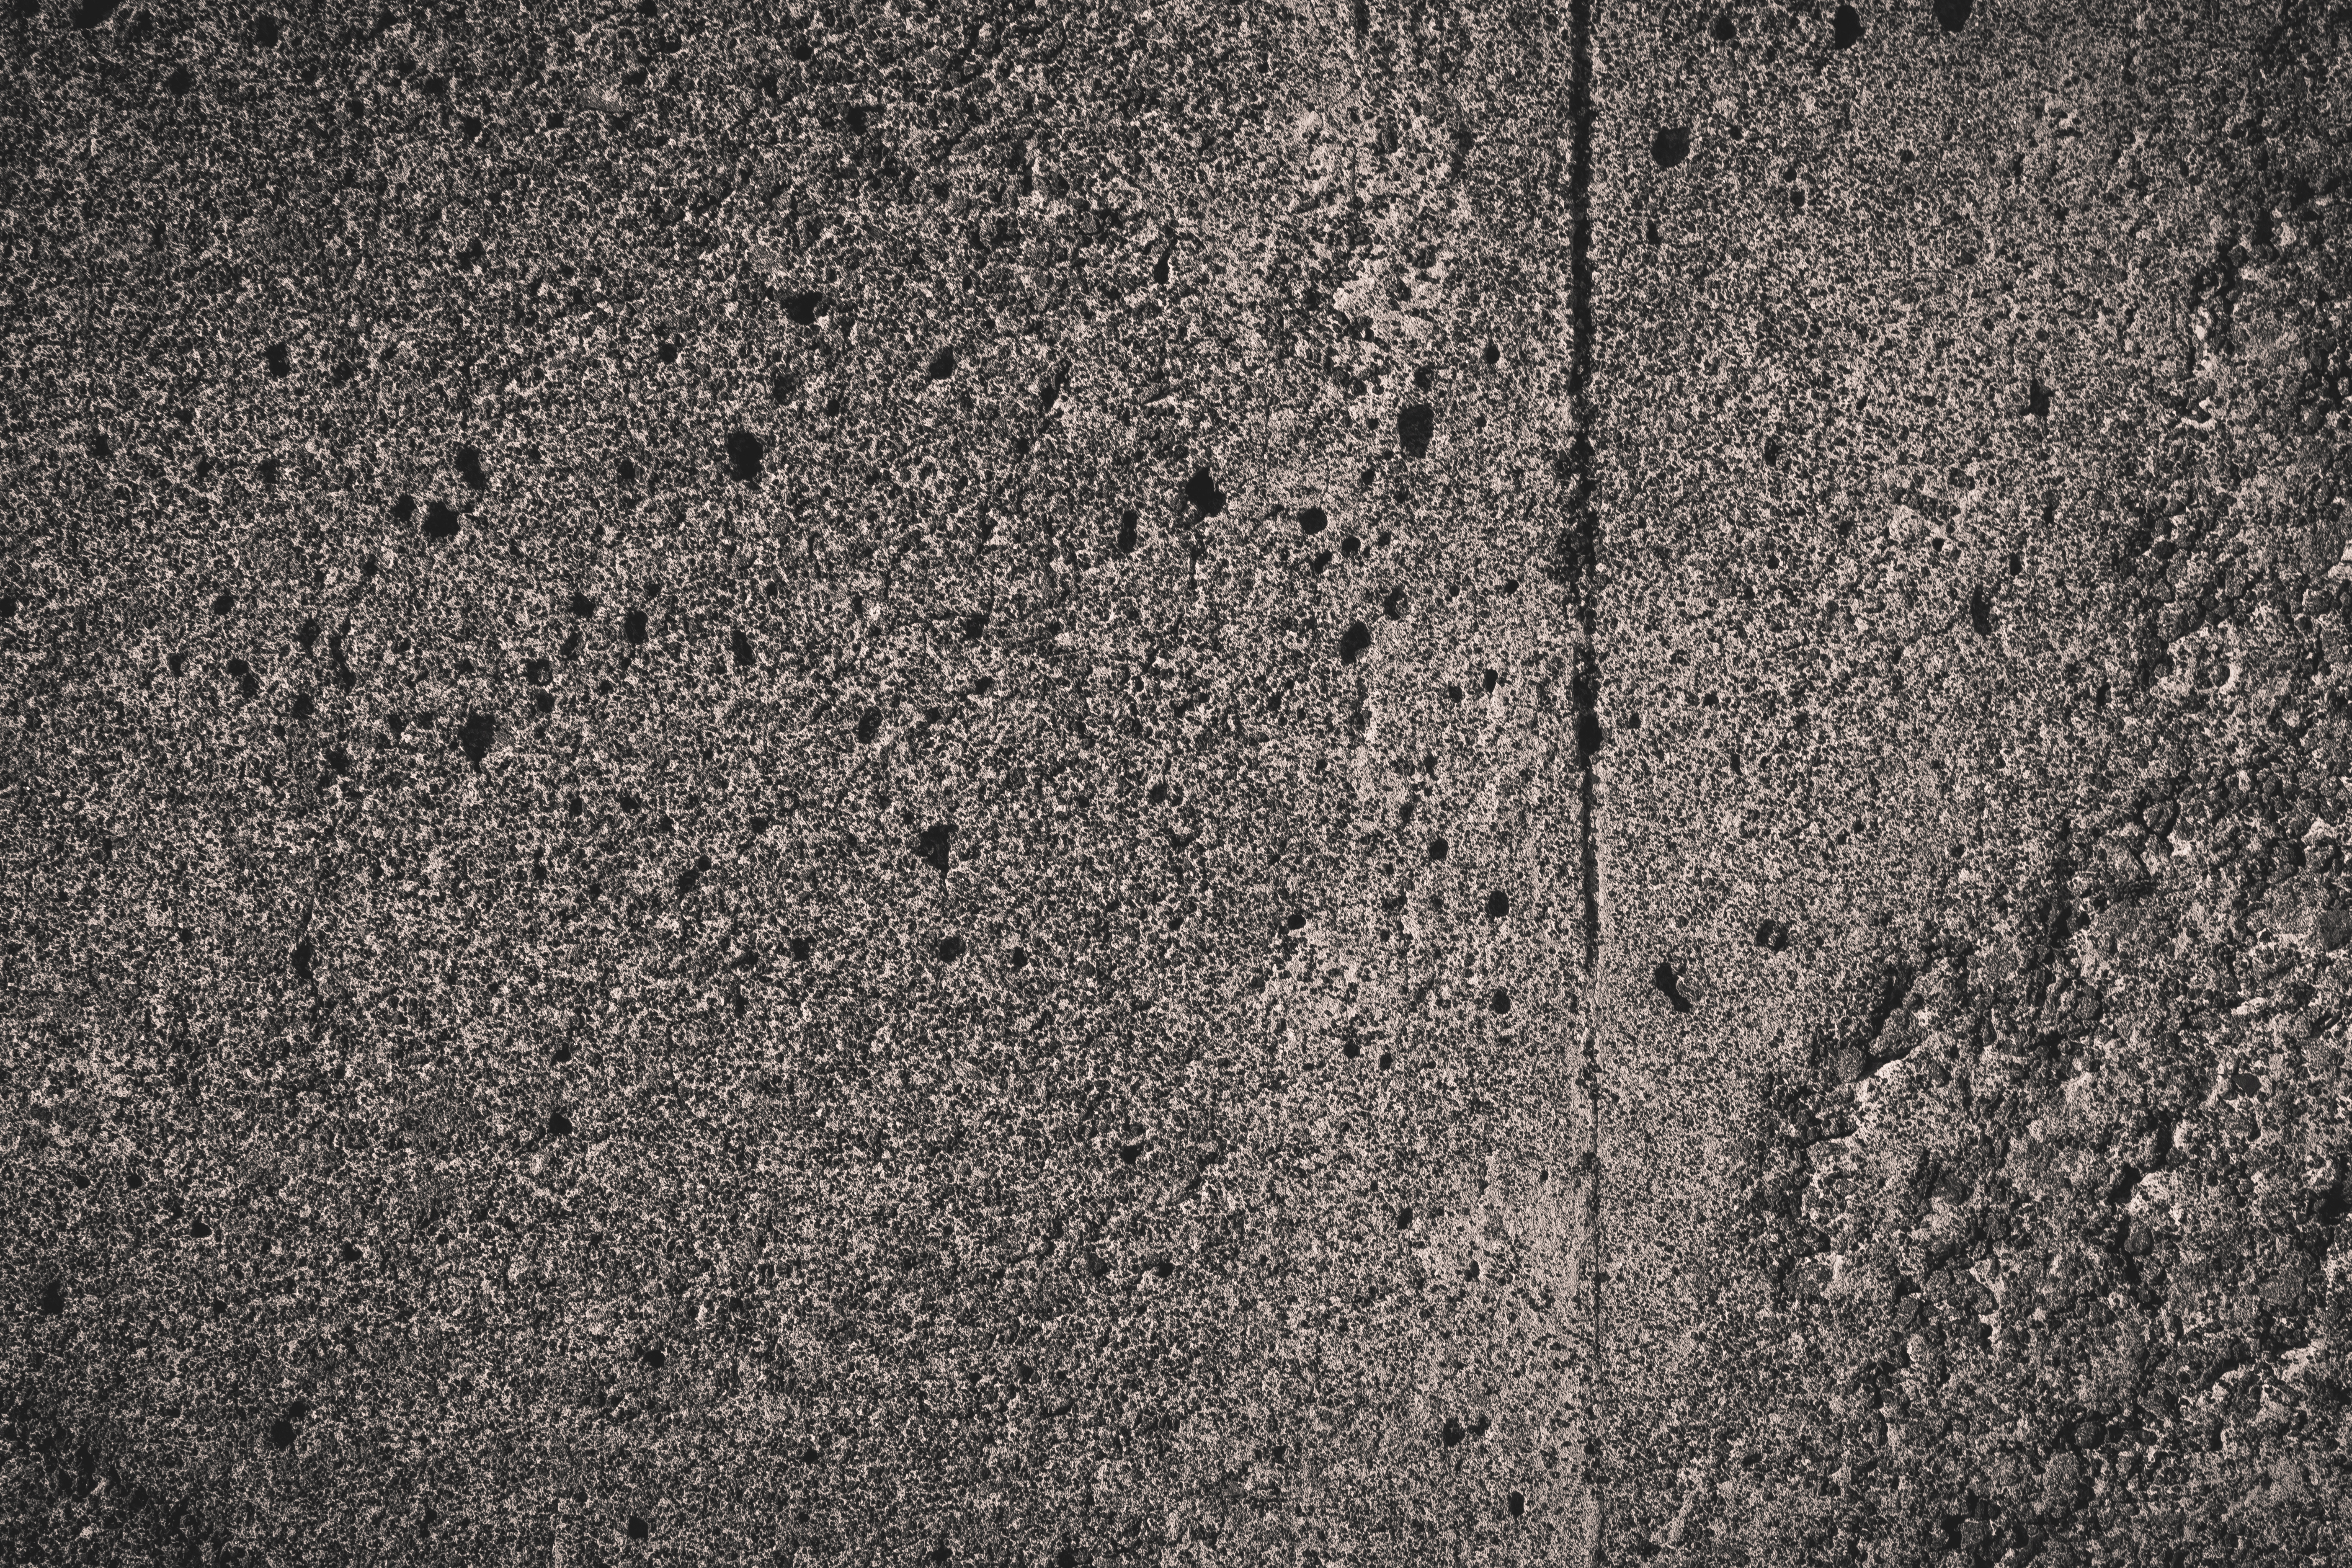 Free Subtle Grunge Concrete Textures | Freebies | Stockvault.net Blog